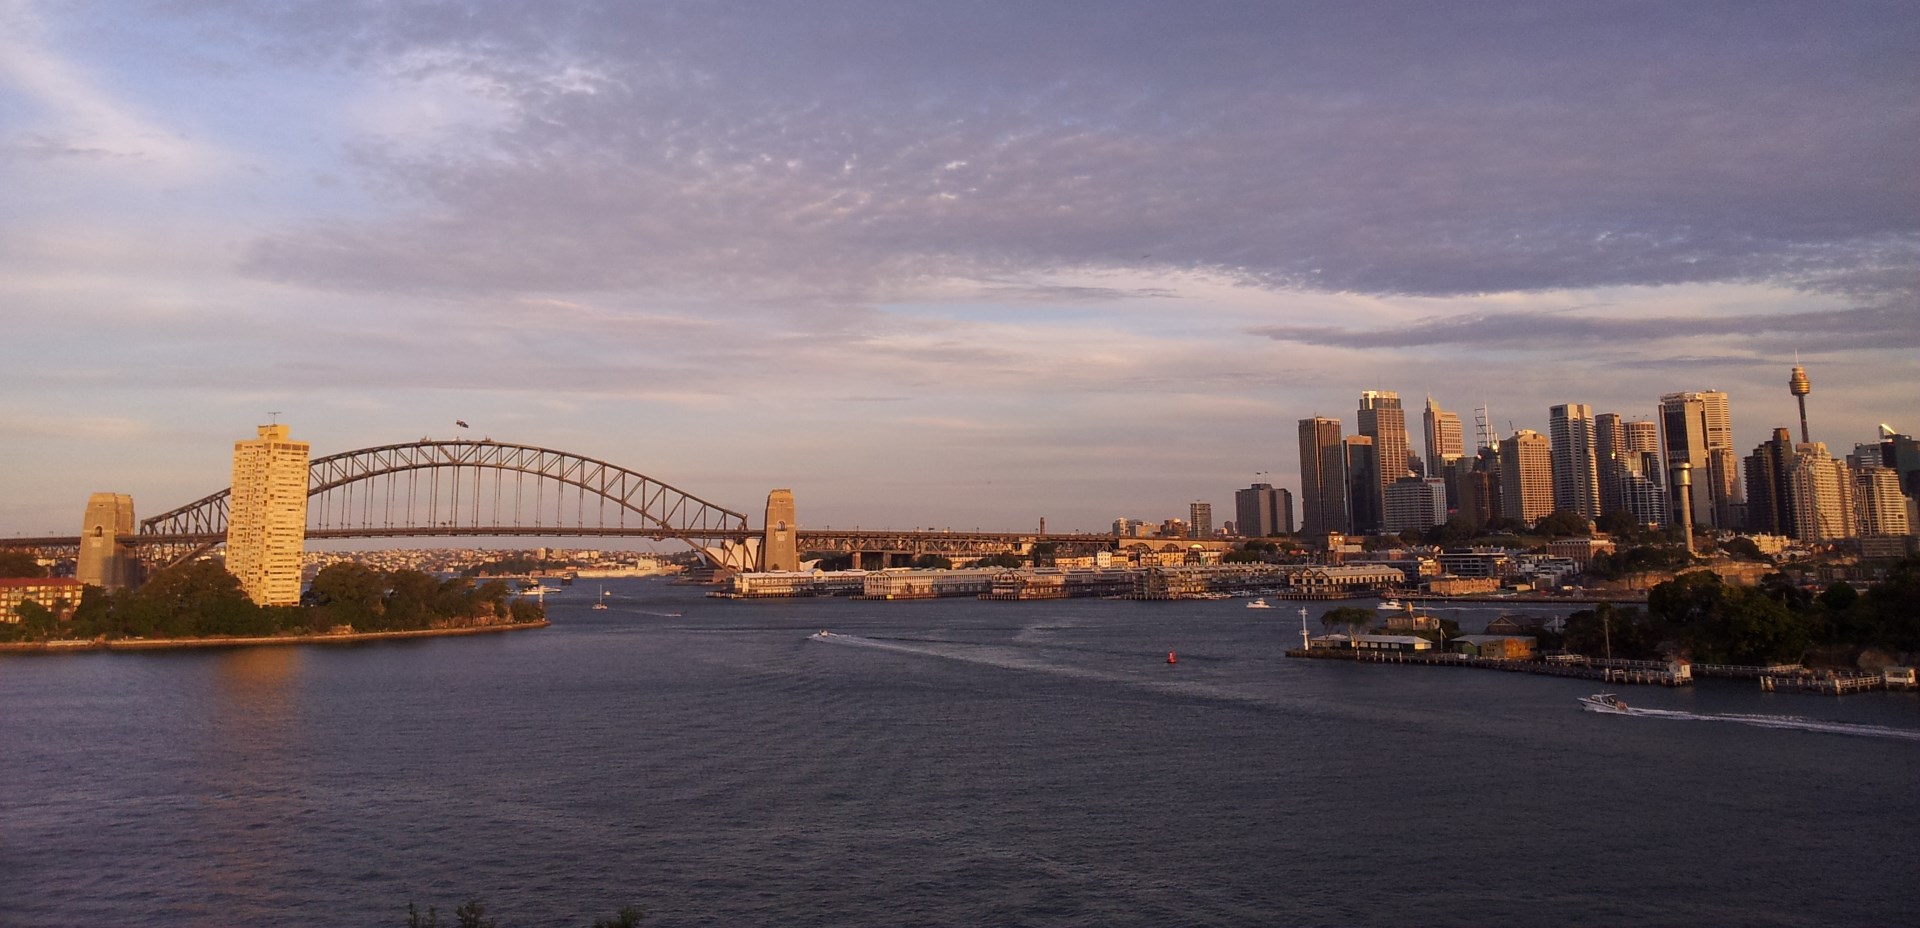 Sydney Harbour (grow/no transition)